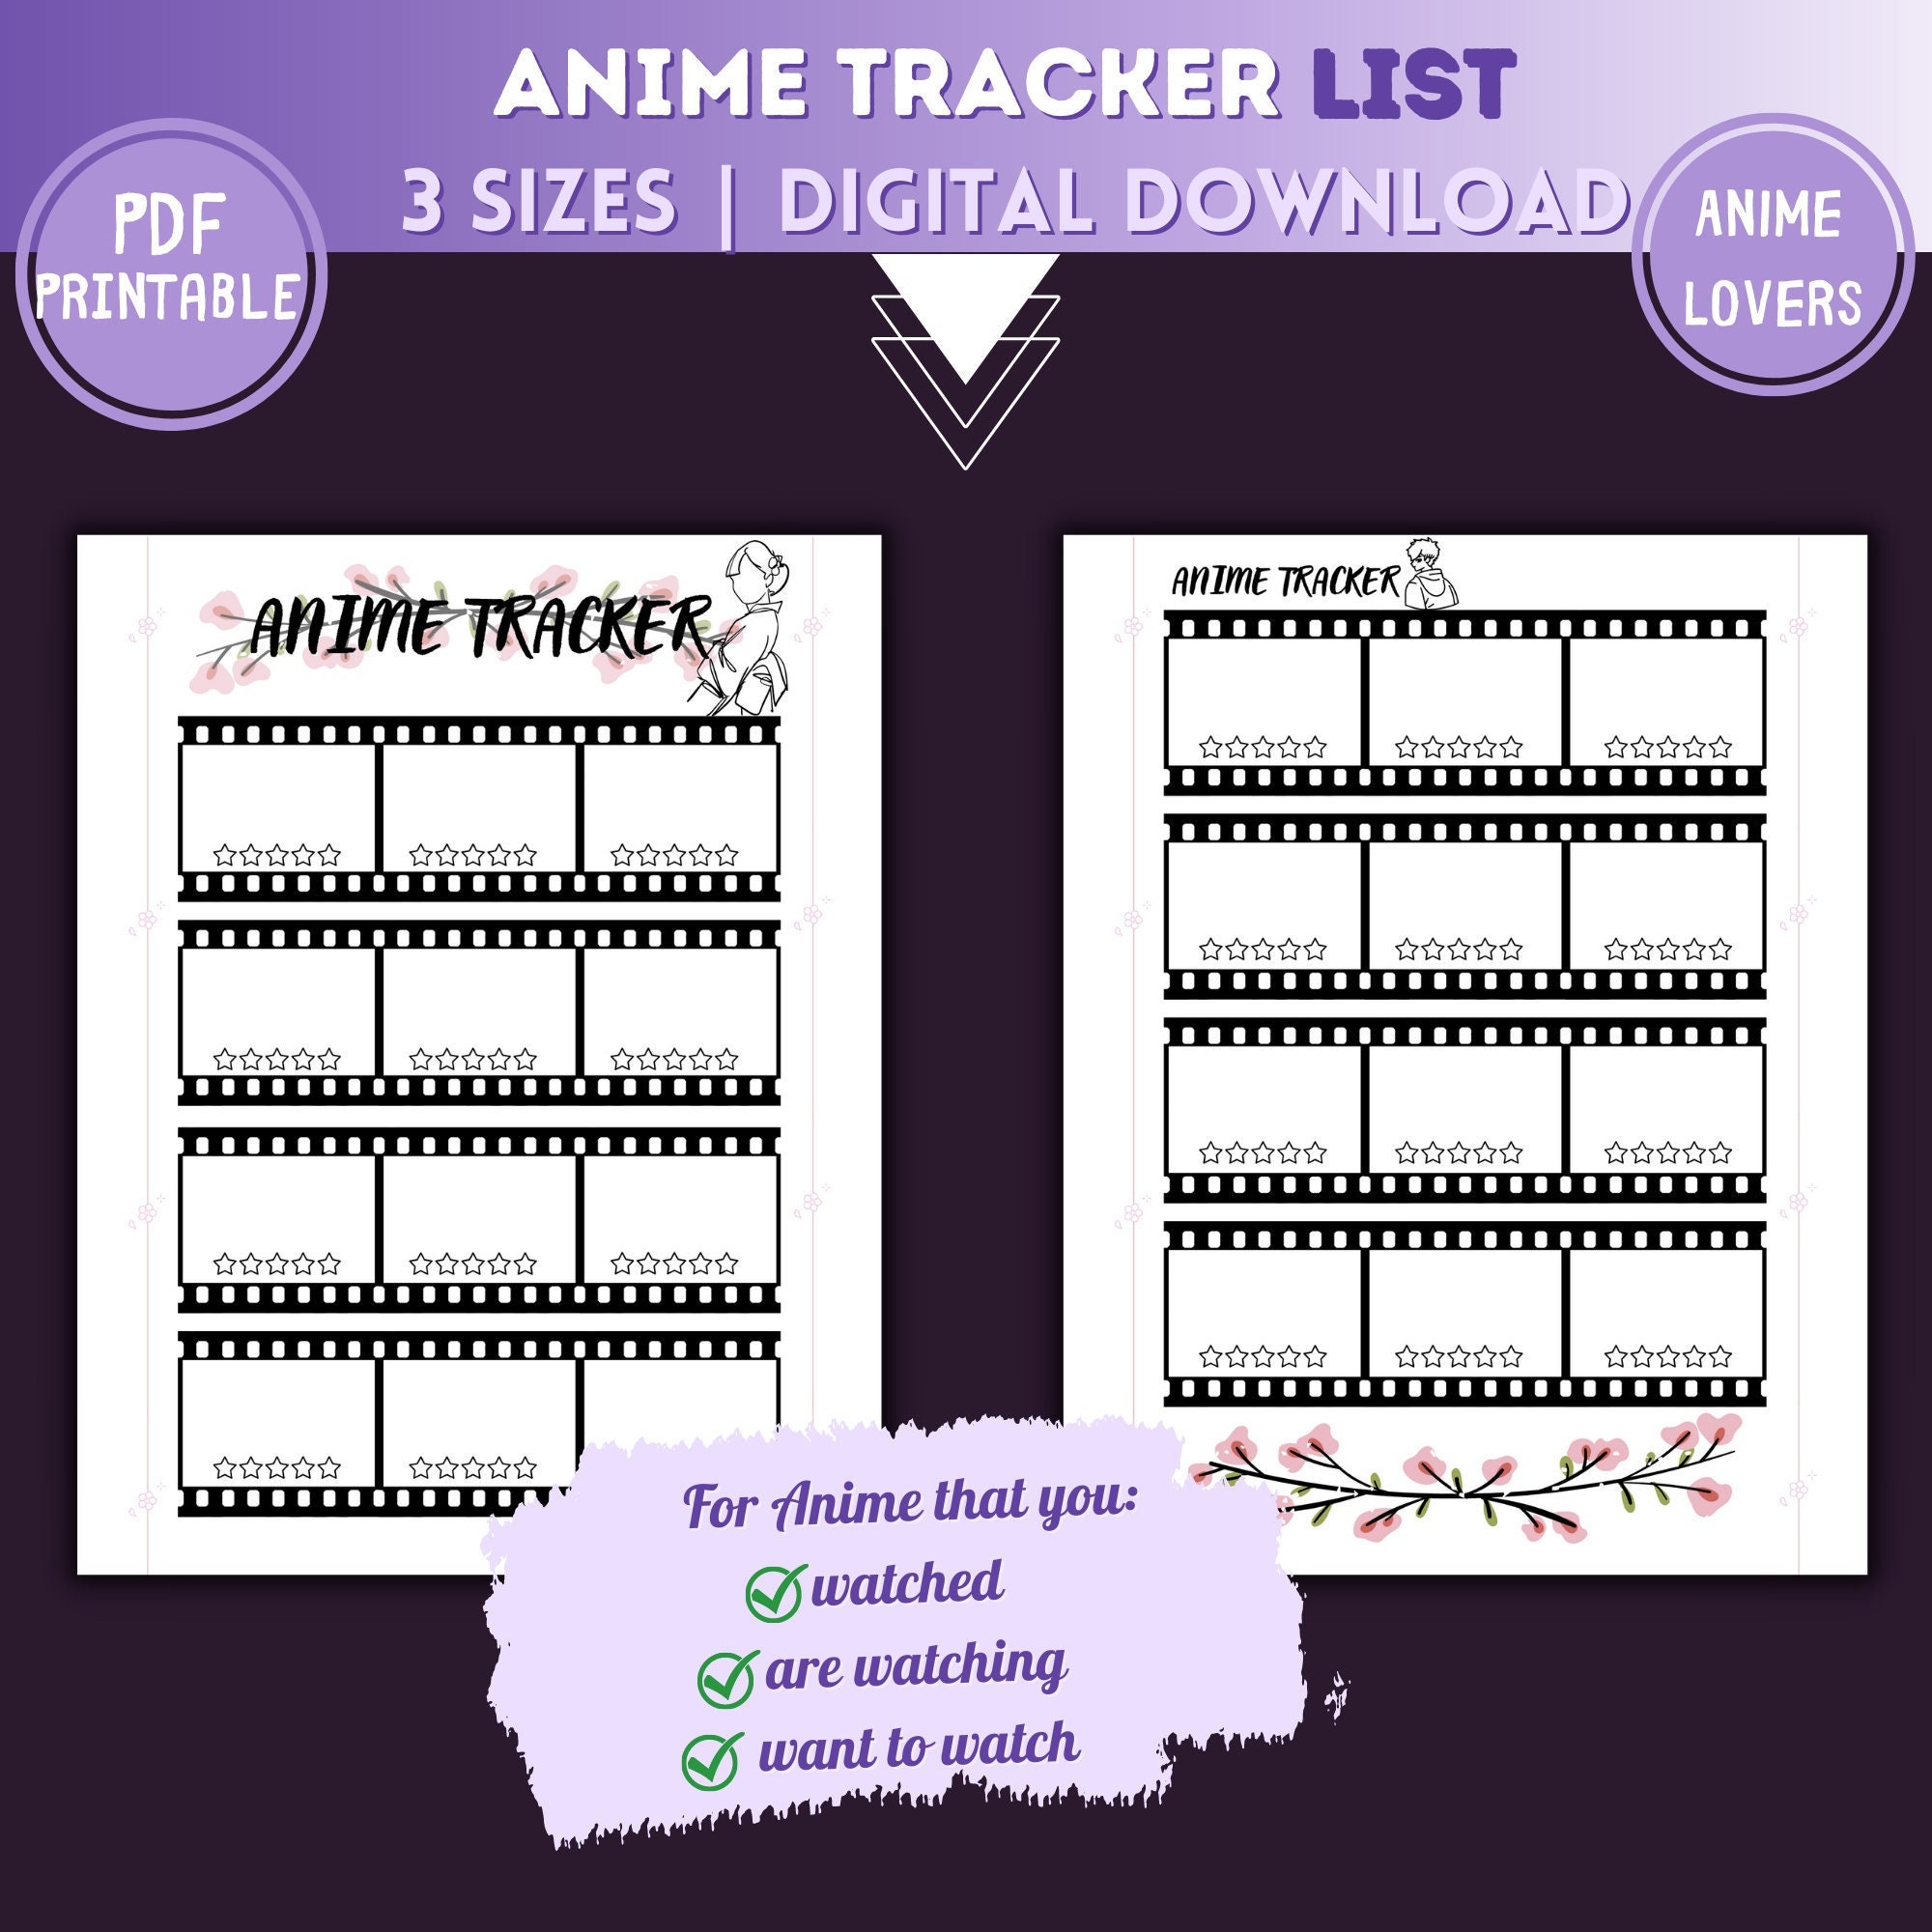 Simkl Lists: TV, Anime, Movies - TV Tracker